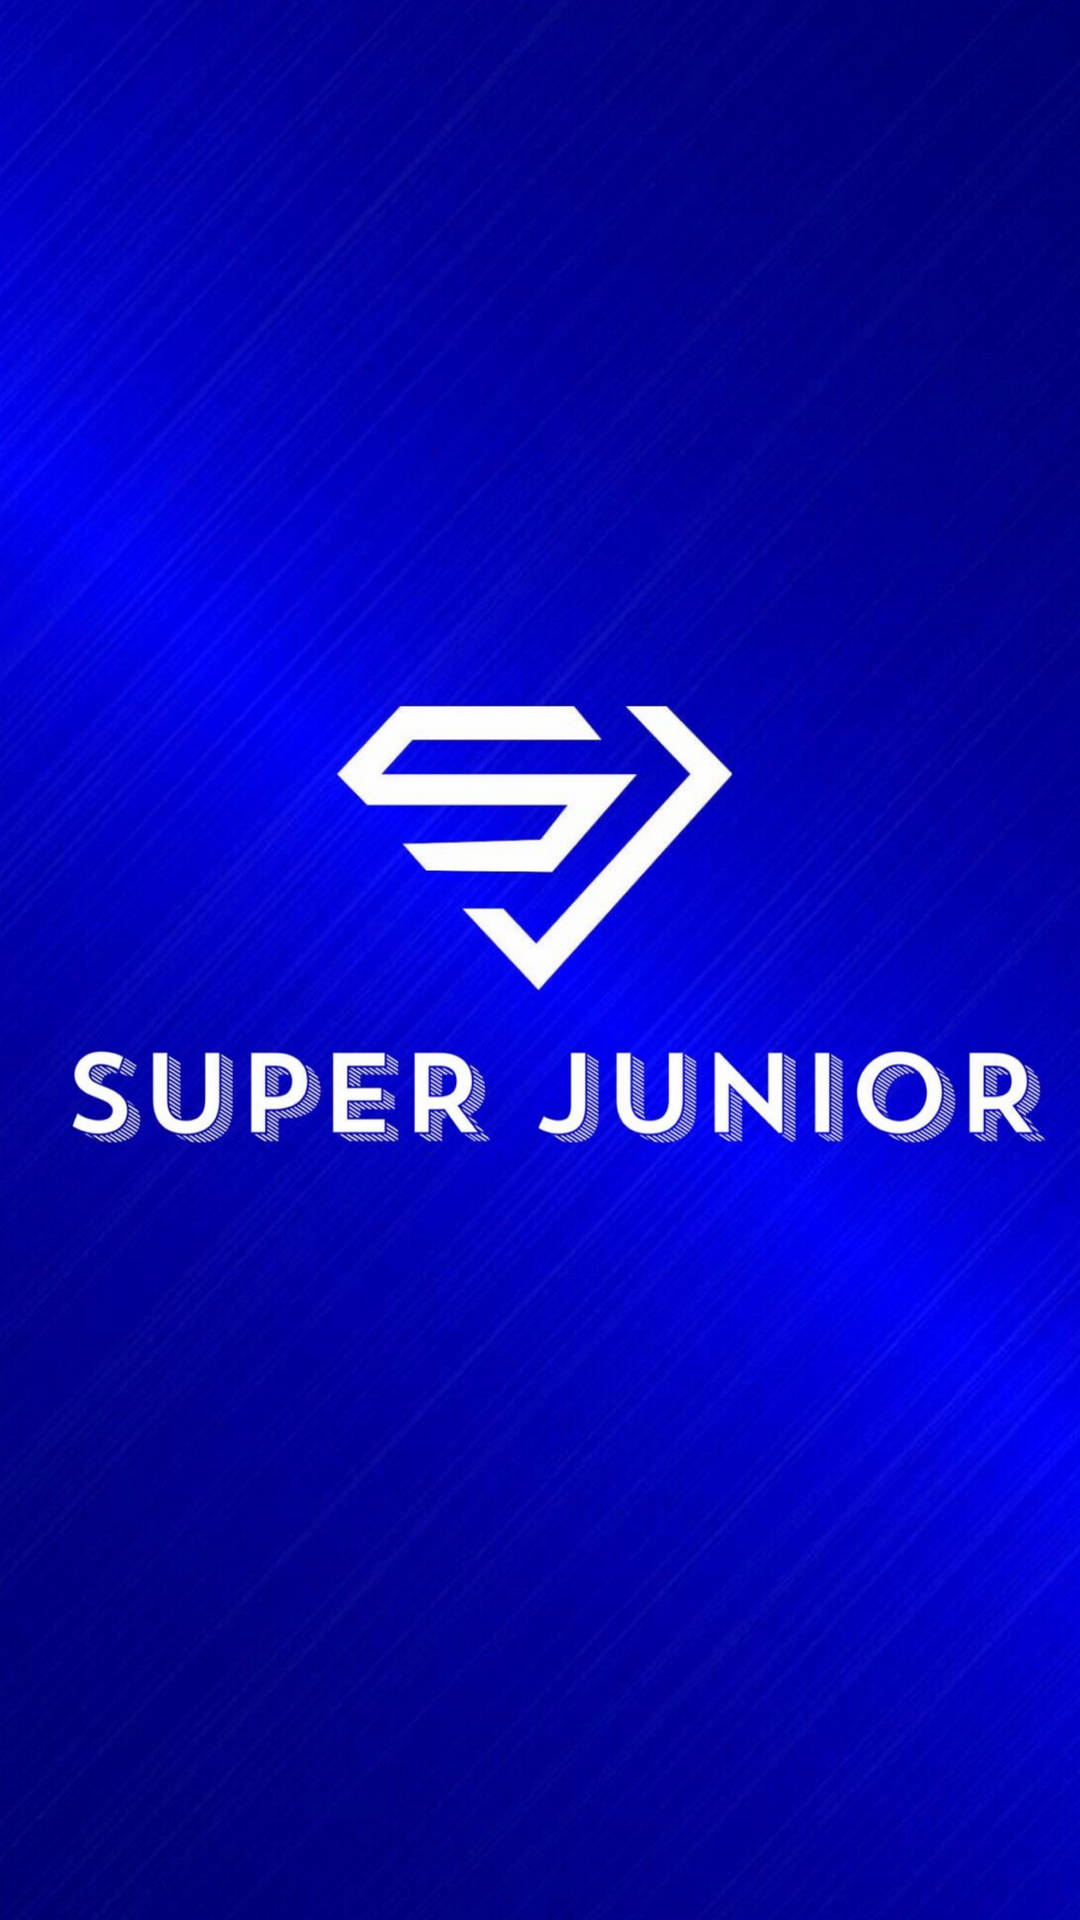 Super Junior Logo Wallpaper